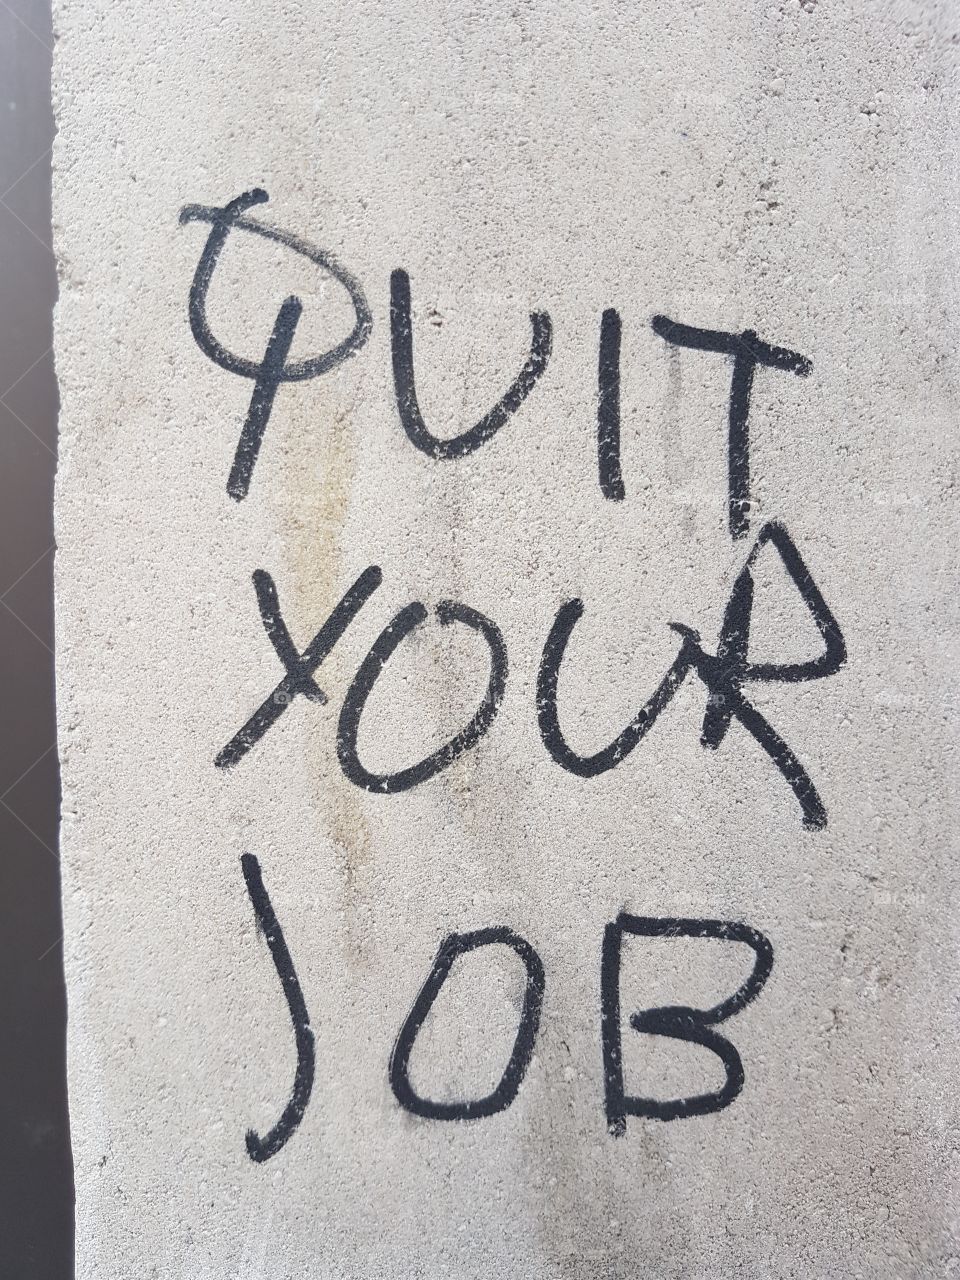 "Quit your Job"